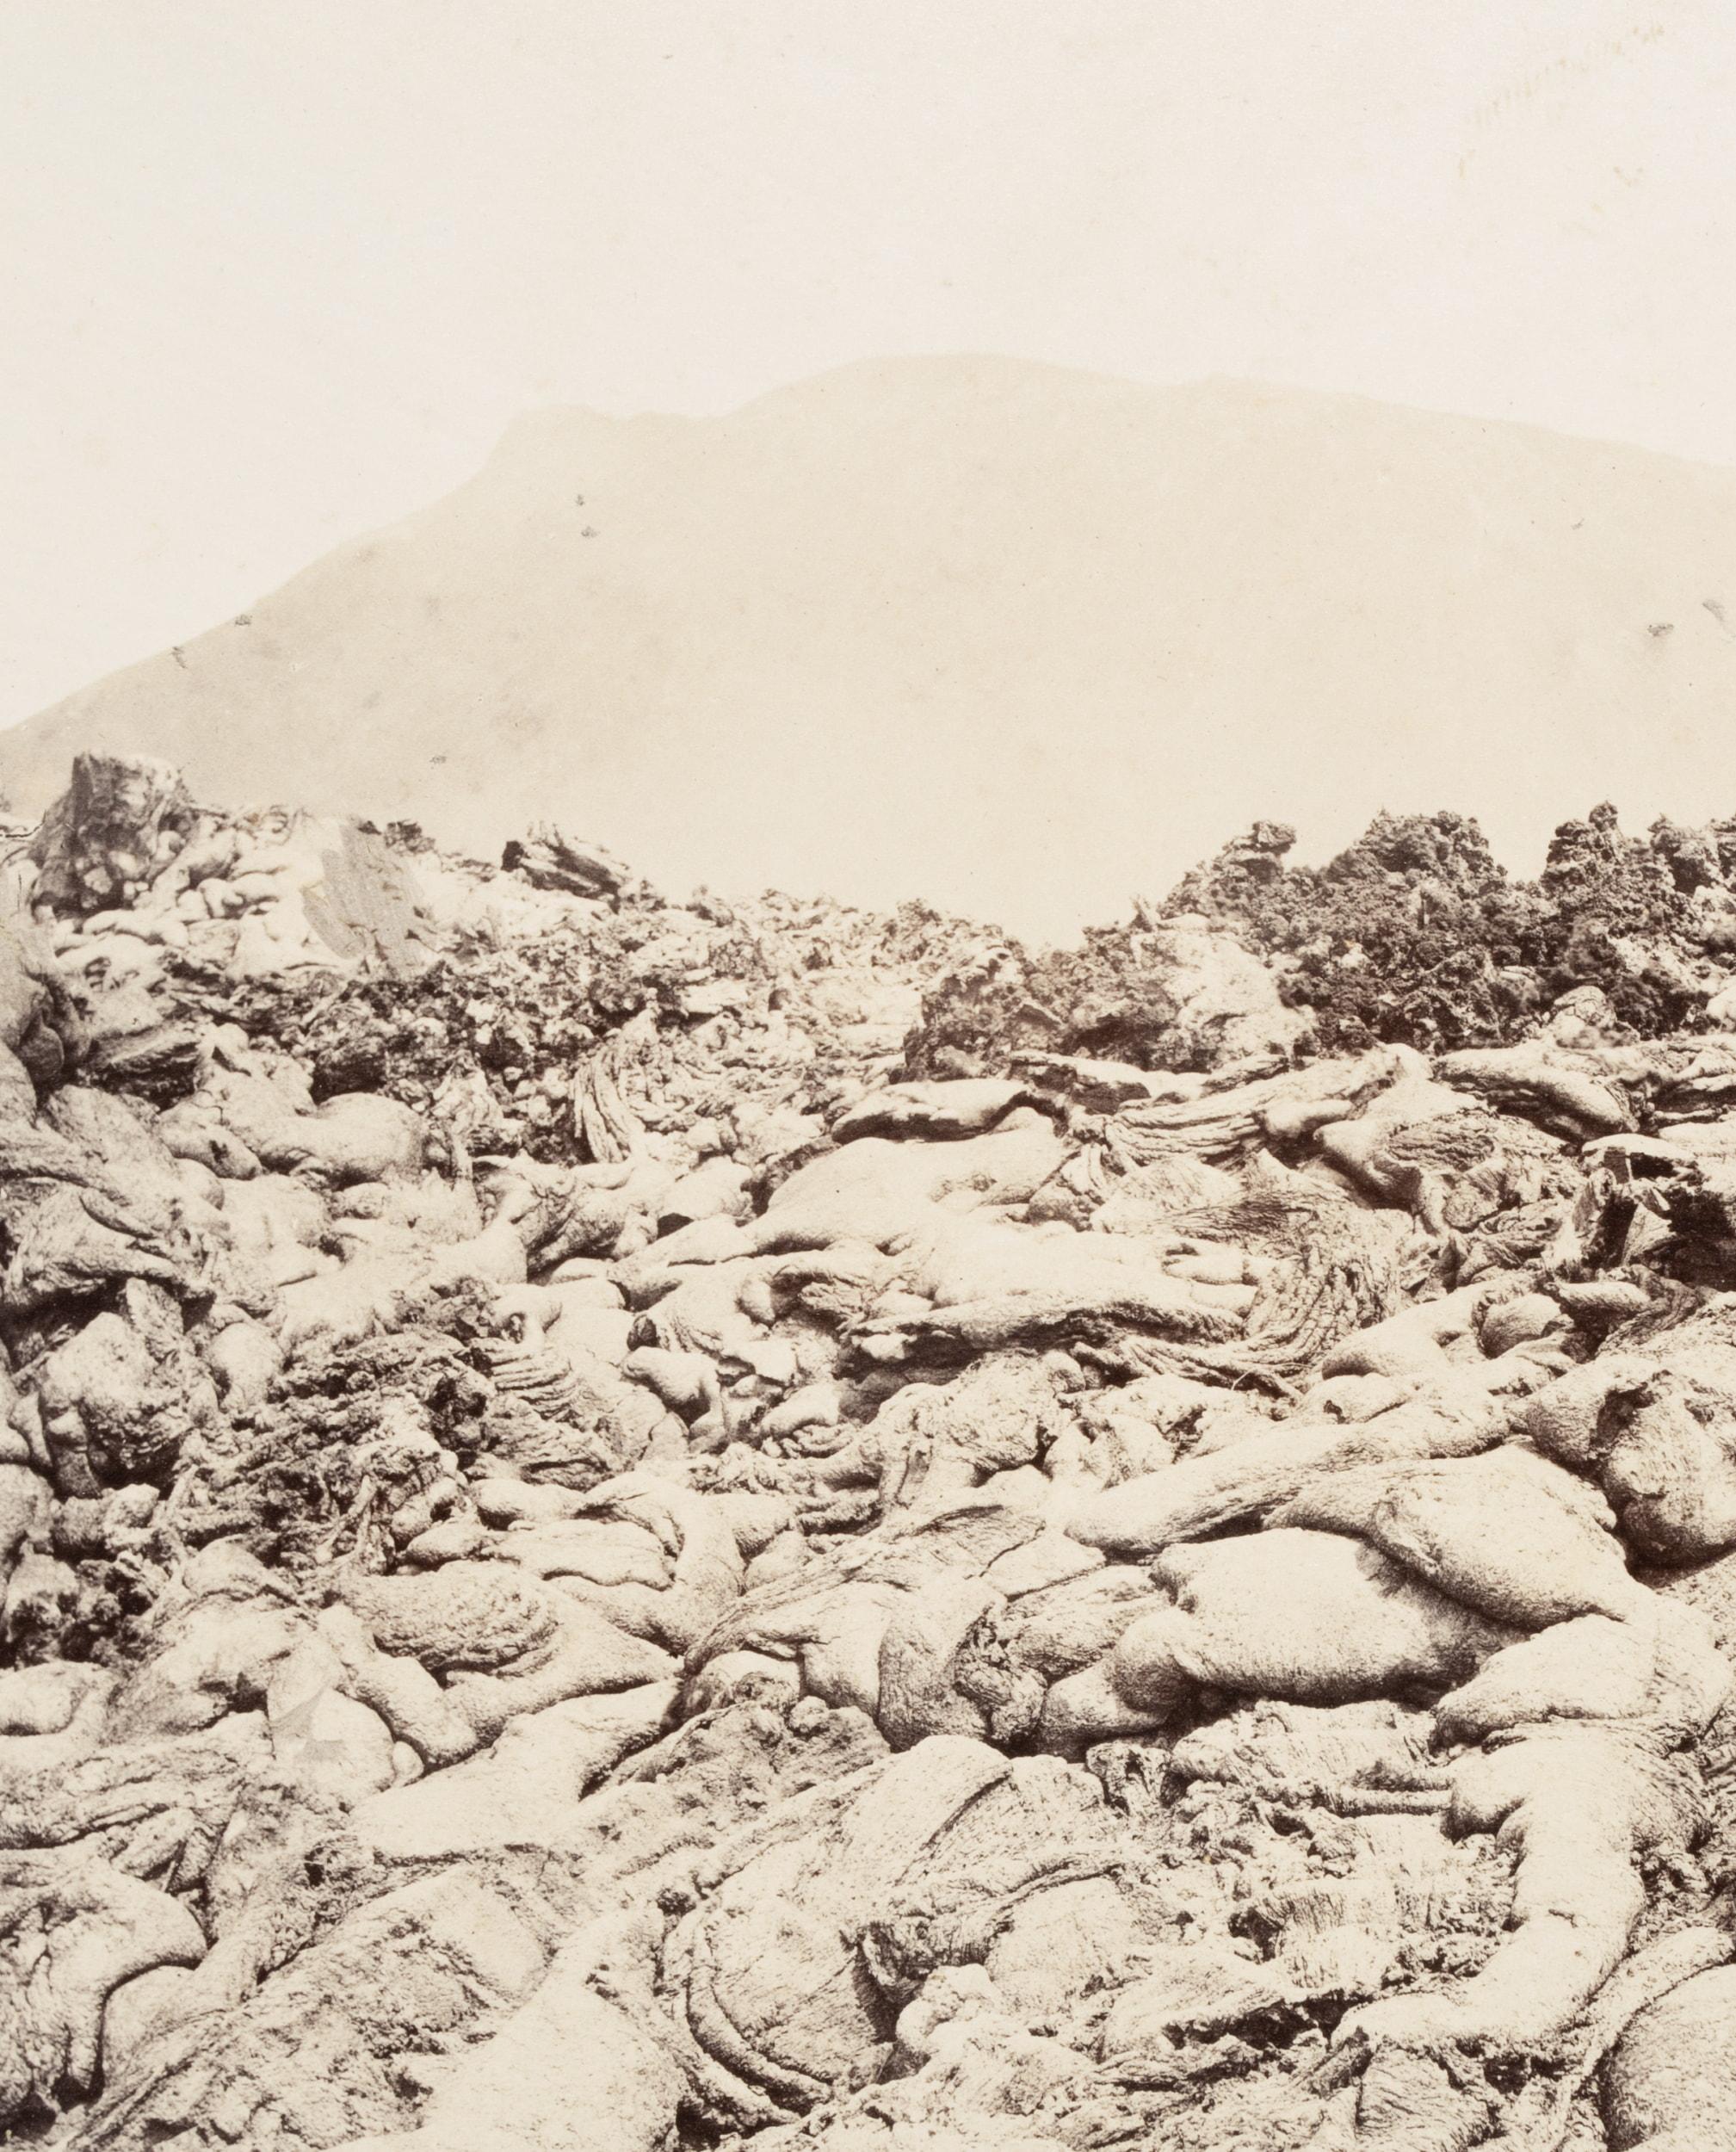 Roberto Rive (1817 - 1868 ): Berggipfel mit Lava des Vesuvs, Zeugnis der Zeit, um 1880, Albumenpapierabzug

Technik: Albuminpapierabzug, aufgezogen auf Pappe

Beschriftung: unten links in der Druckplatte: 